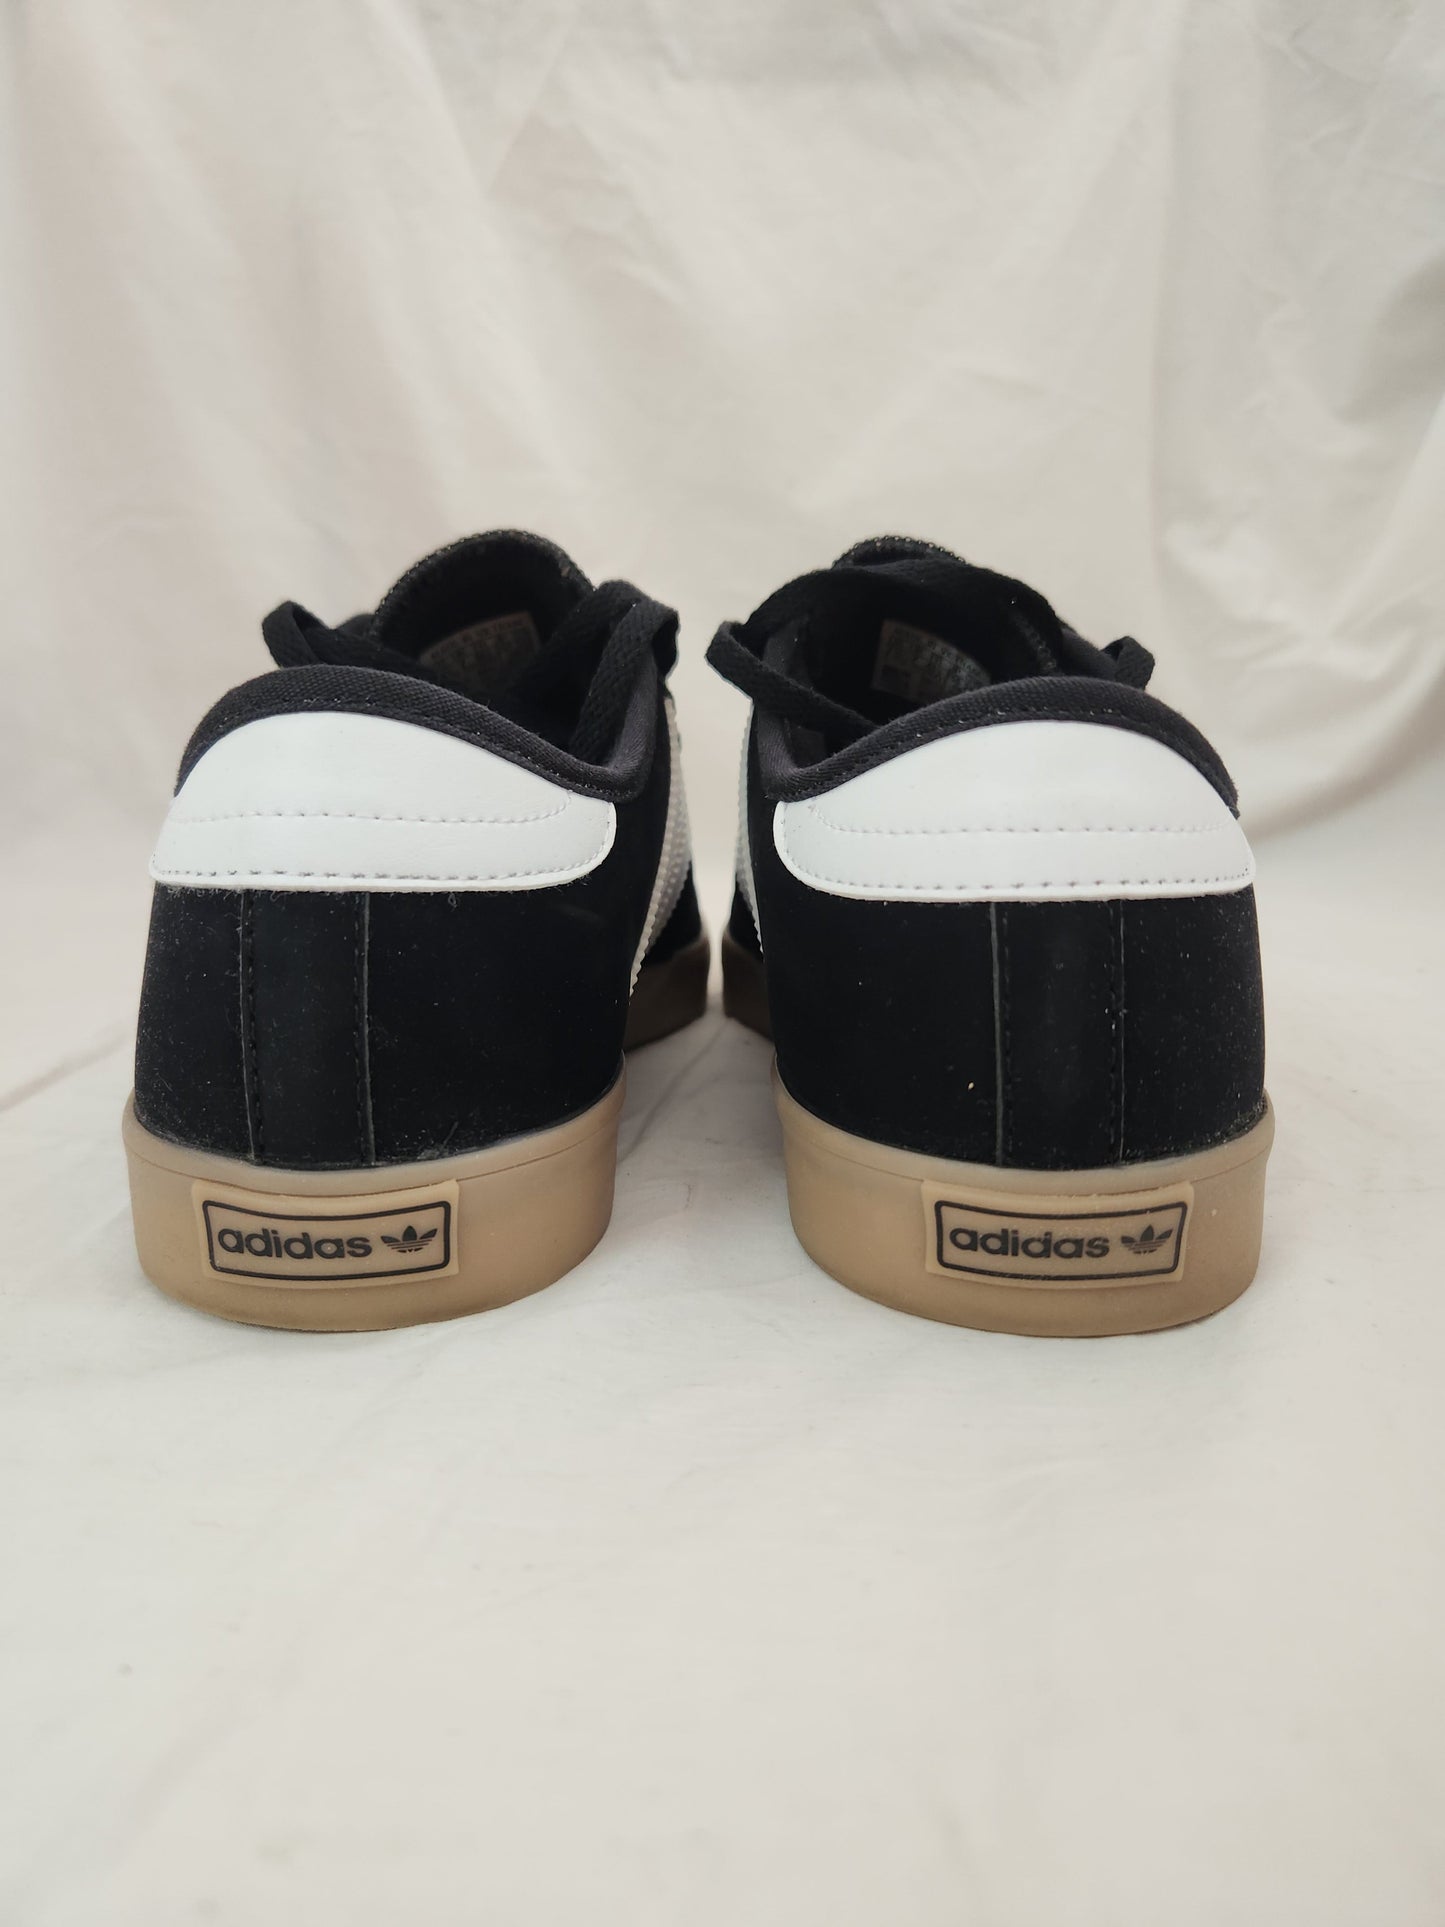 NIB - ADIDAS black white Seeley Sneaker Shoes - Men's 7.5